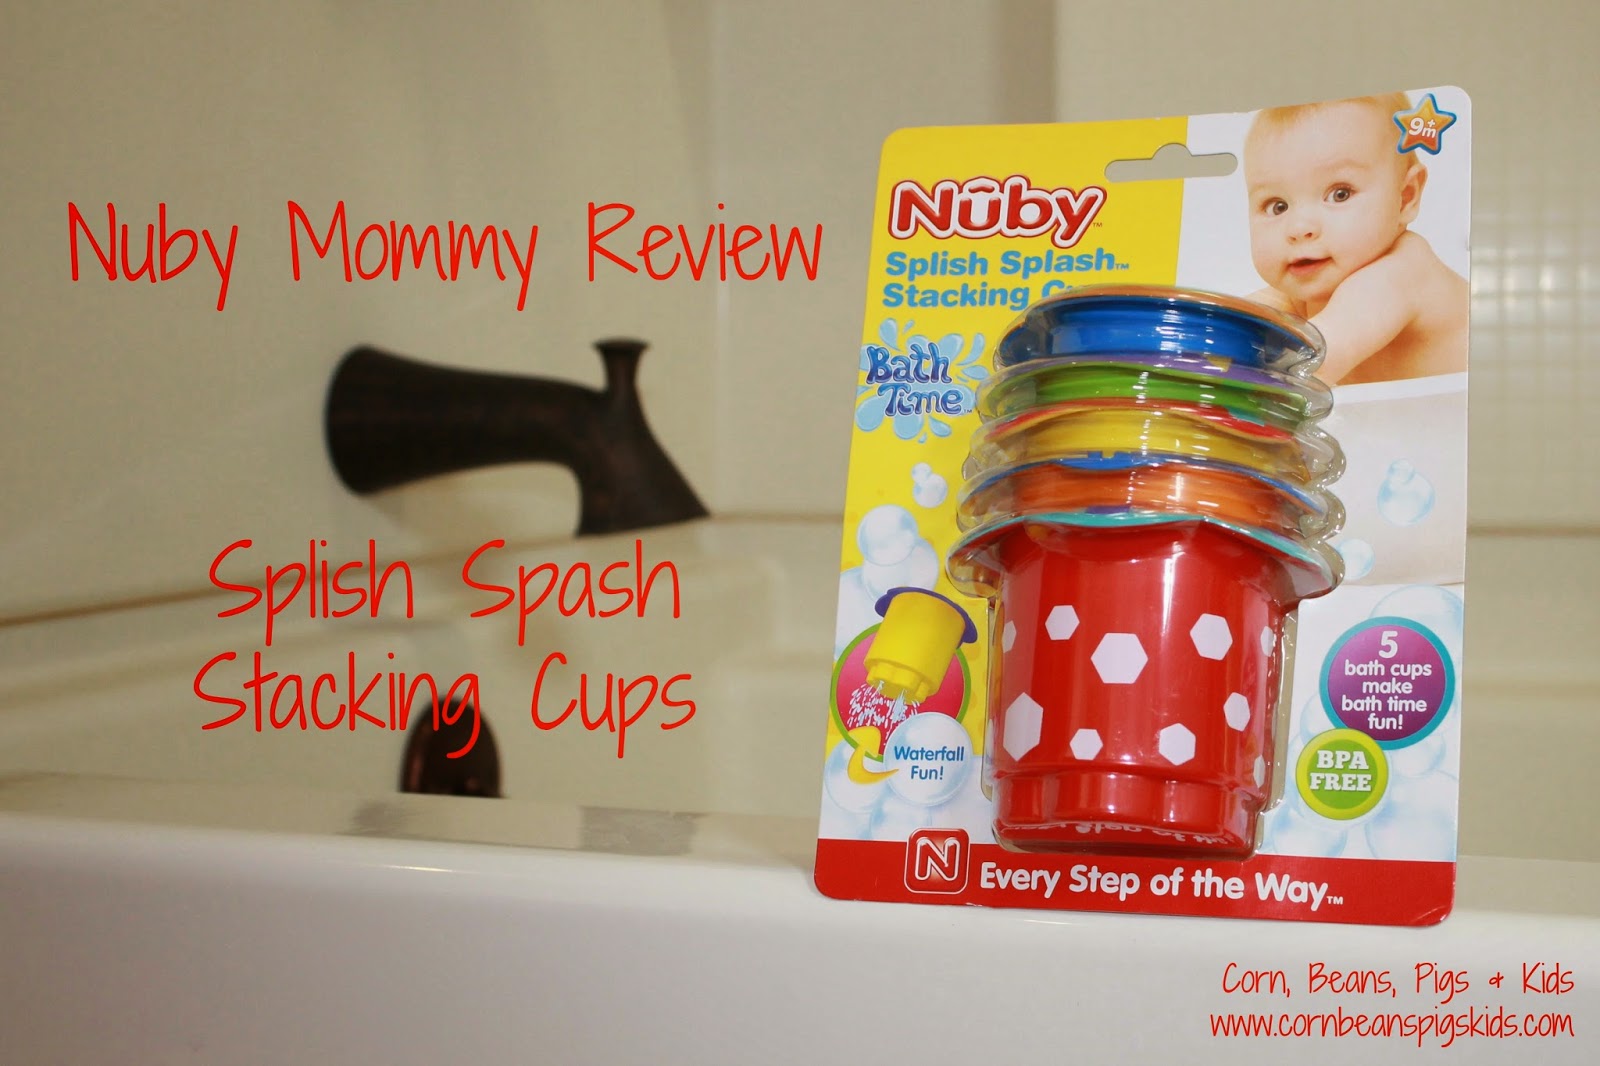 Nuby Mommy Review - Splish Splash Stacking Cups